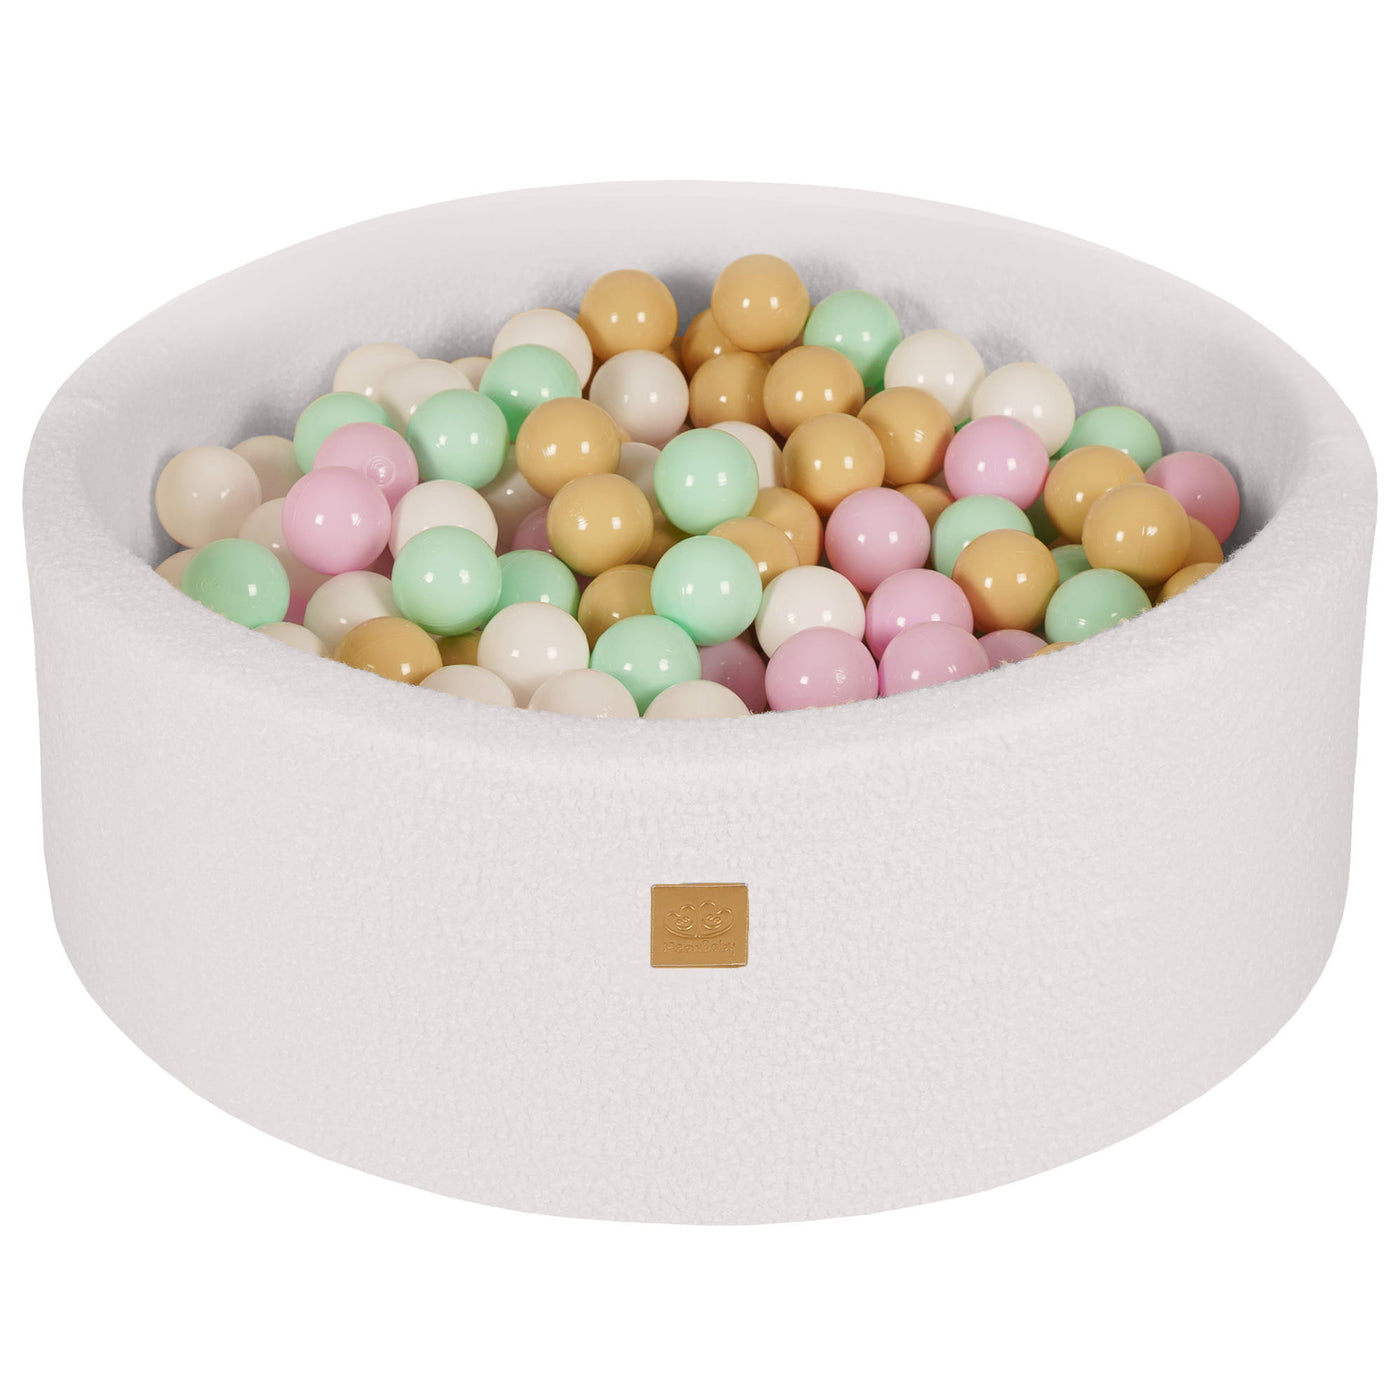 White Boucle Ball Pit | Pastel Pink, Mint, White & Beige Balls